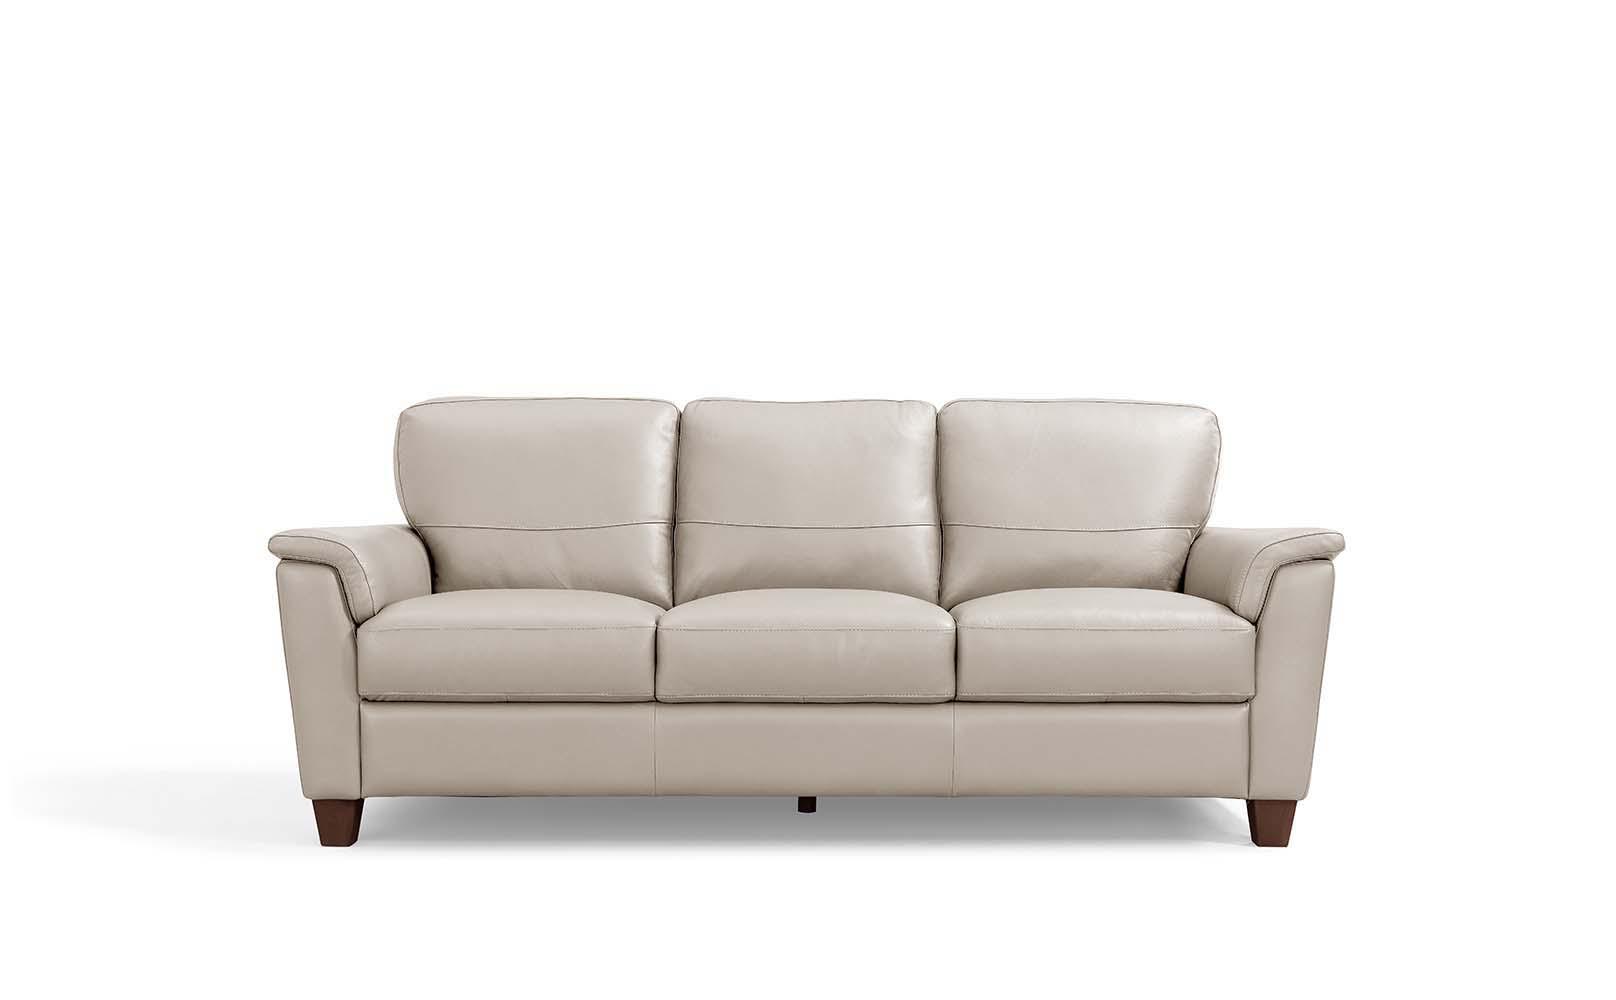 ACME - Pacific Palisades - Sofa - Beige Leather - 5th Avenue Furniture